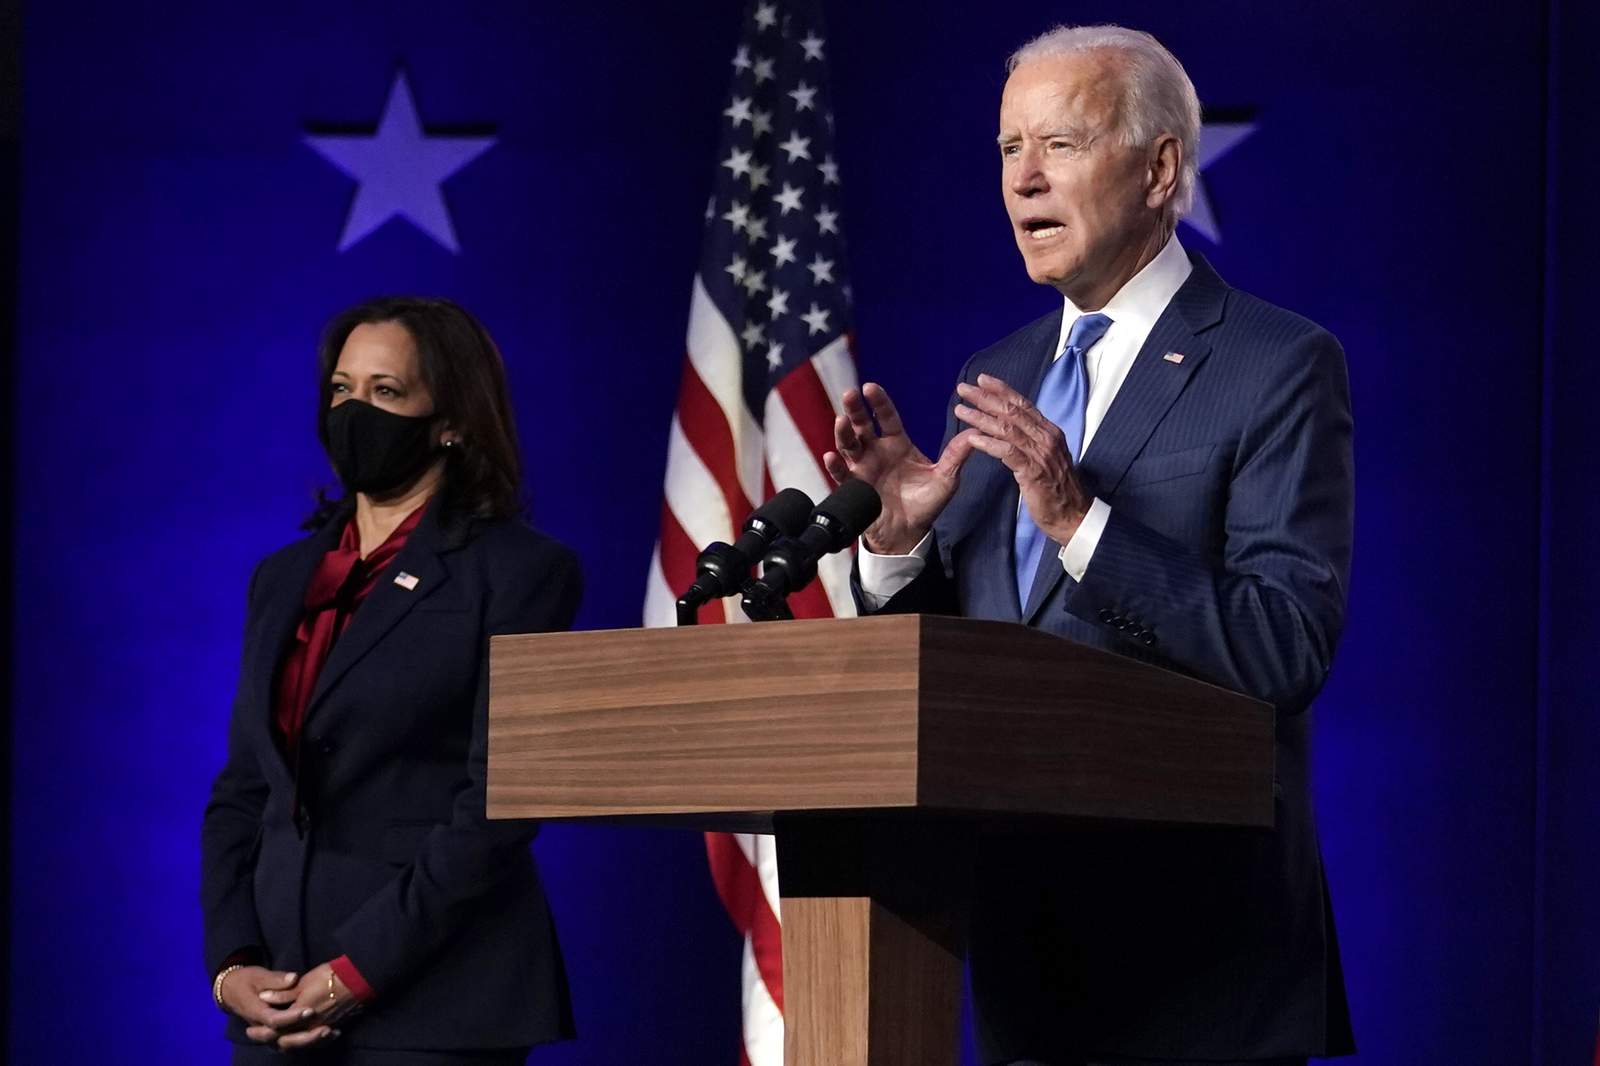 LIVE COVERAGE: Joe Biden projected as next U.S. President